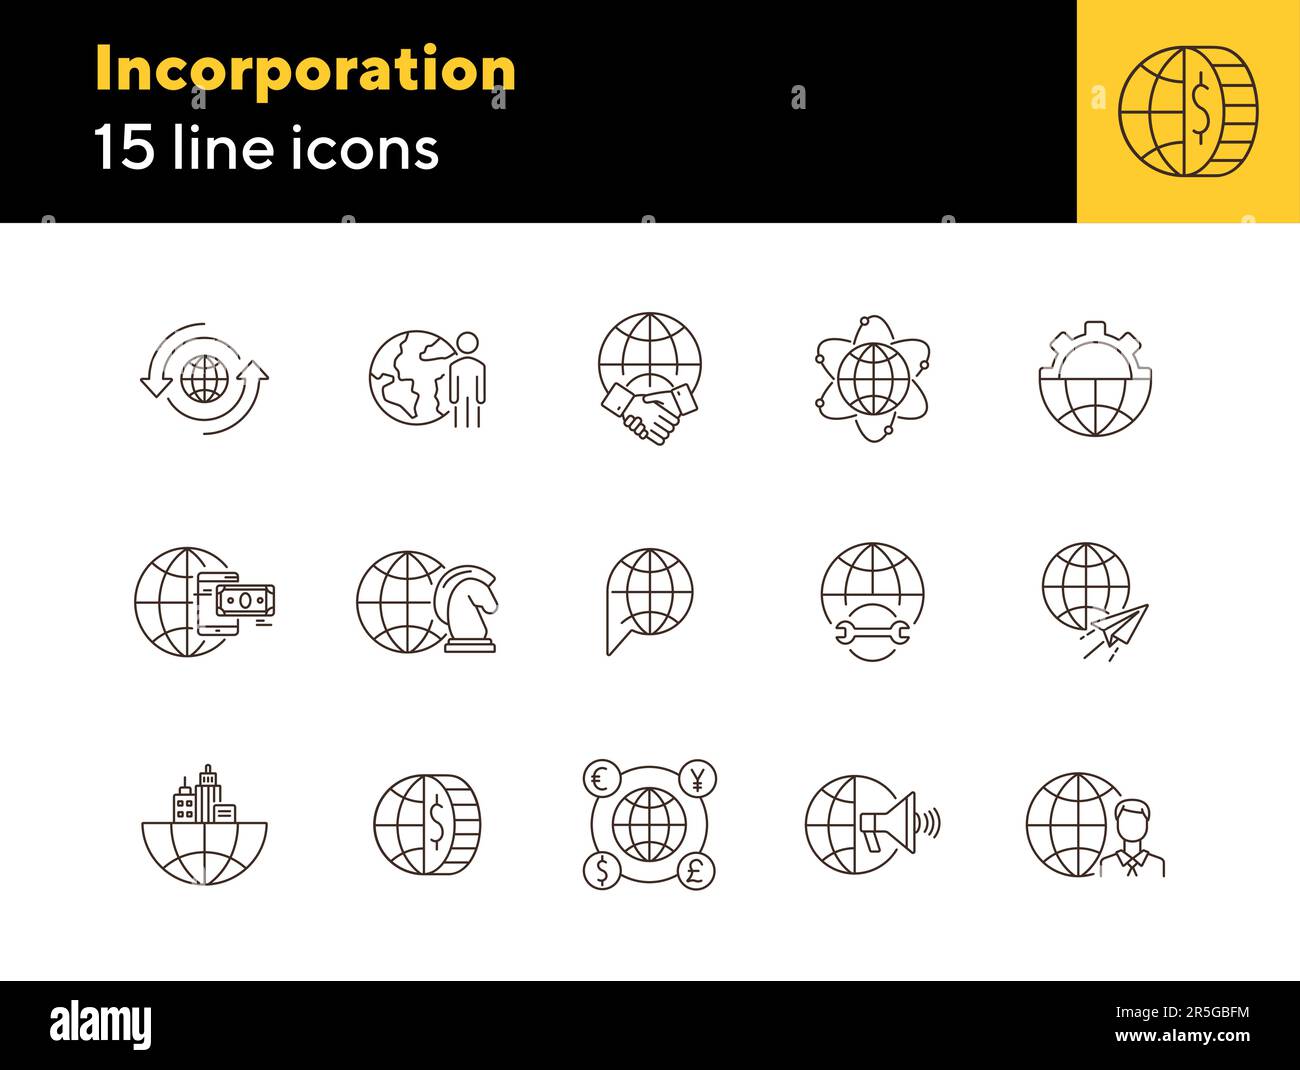 Incorporation line icon set Stock Vector